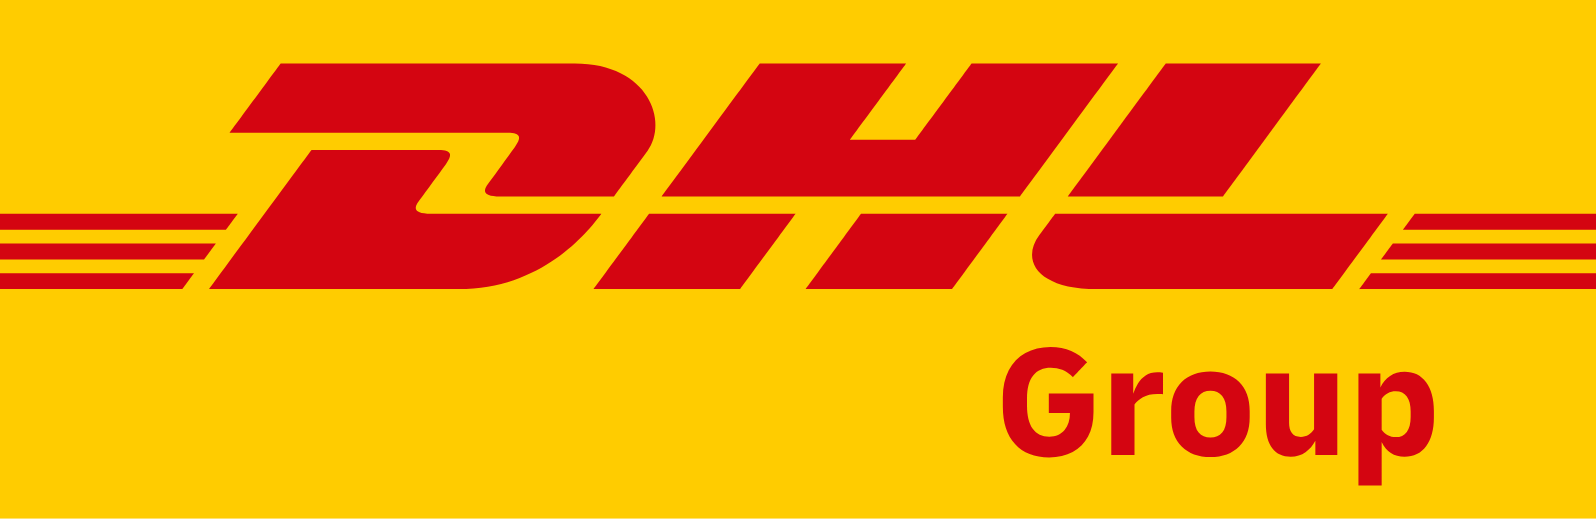 DHL Group (Deutsche Post) logo (transparent PNG)